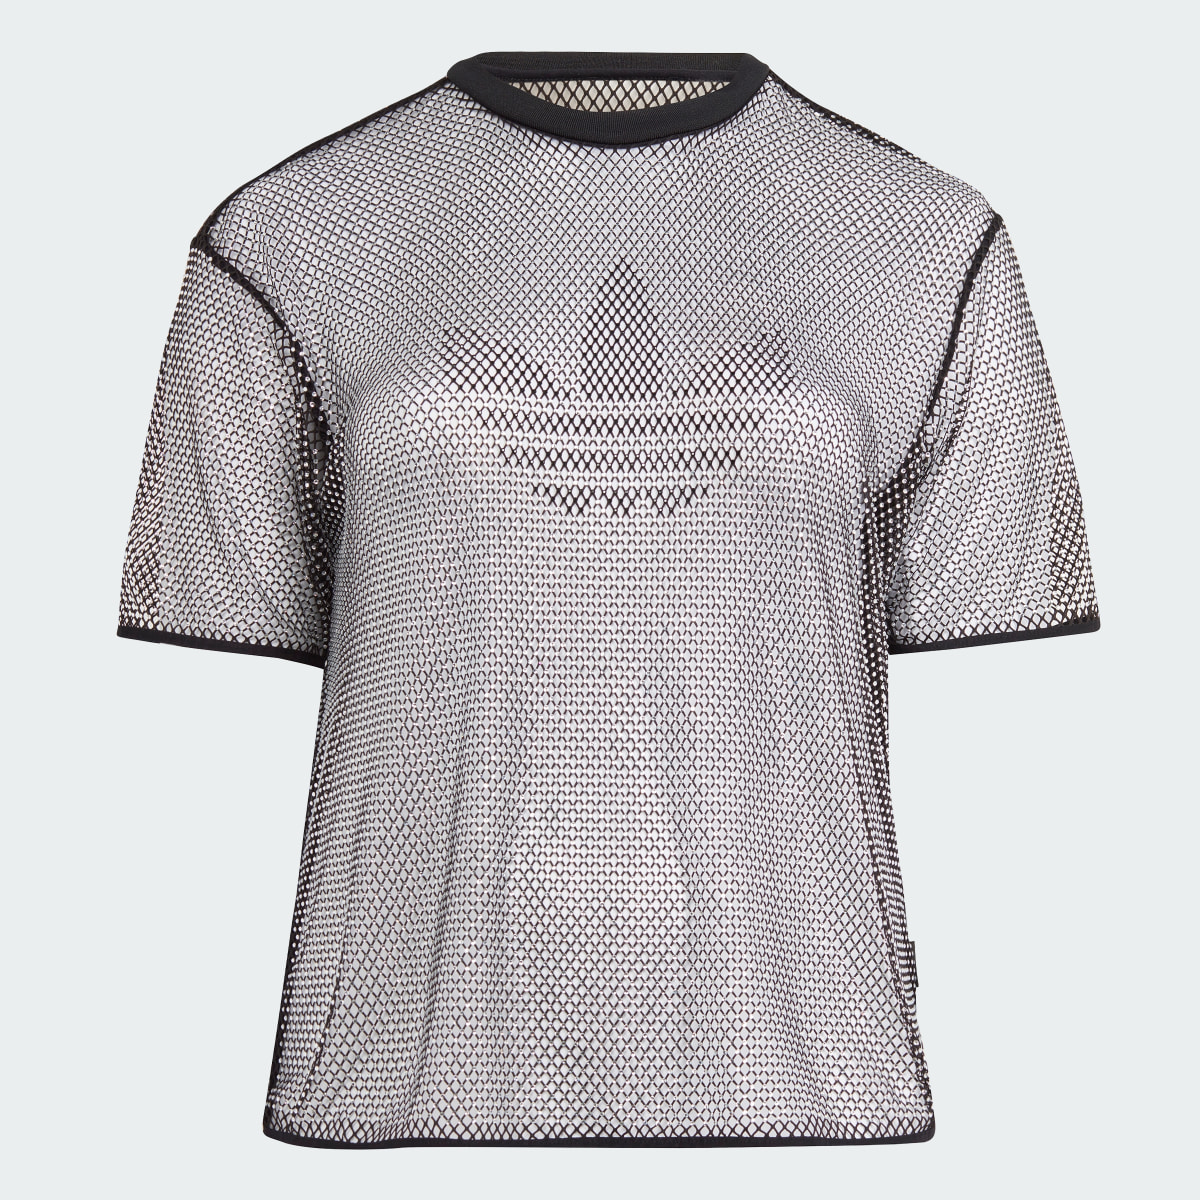 Adidas T-shirt adilenium Rhinestone. 5